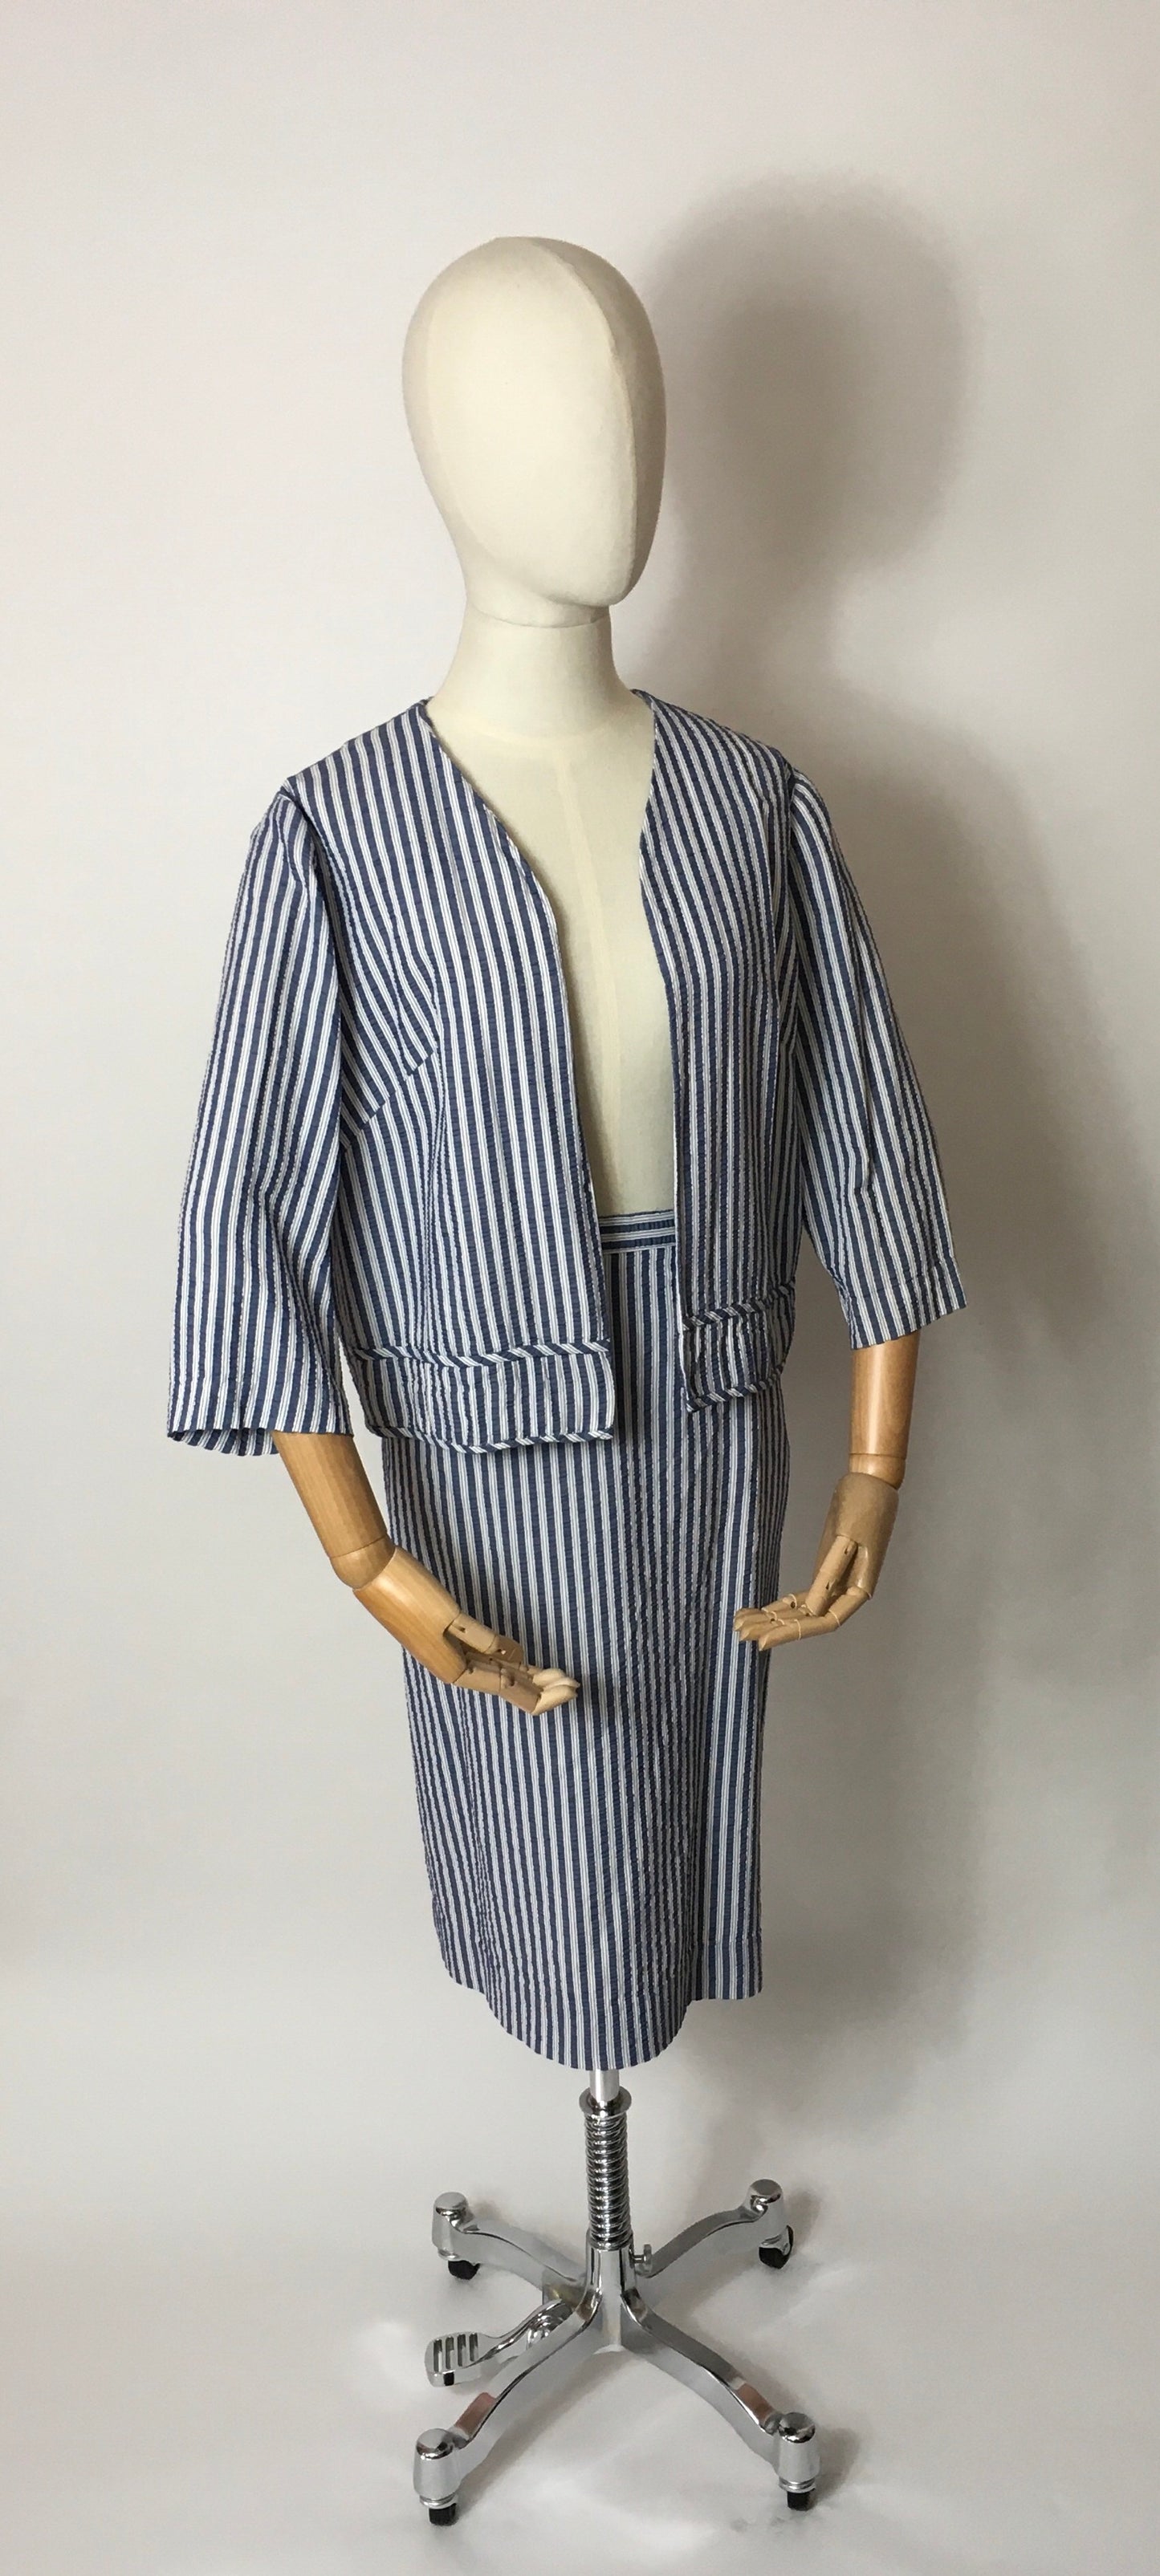 Original 1950s Summer Suit In a lovely Lightweight Seersucker fabric - Blue & White Stripes